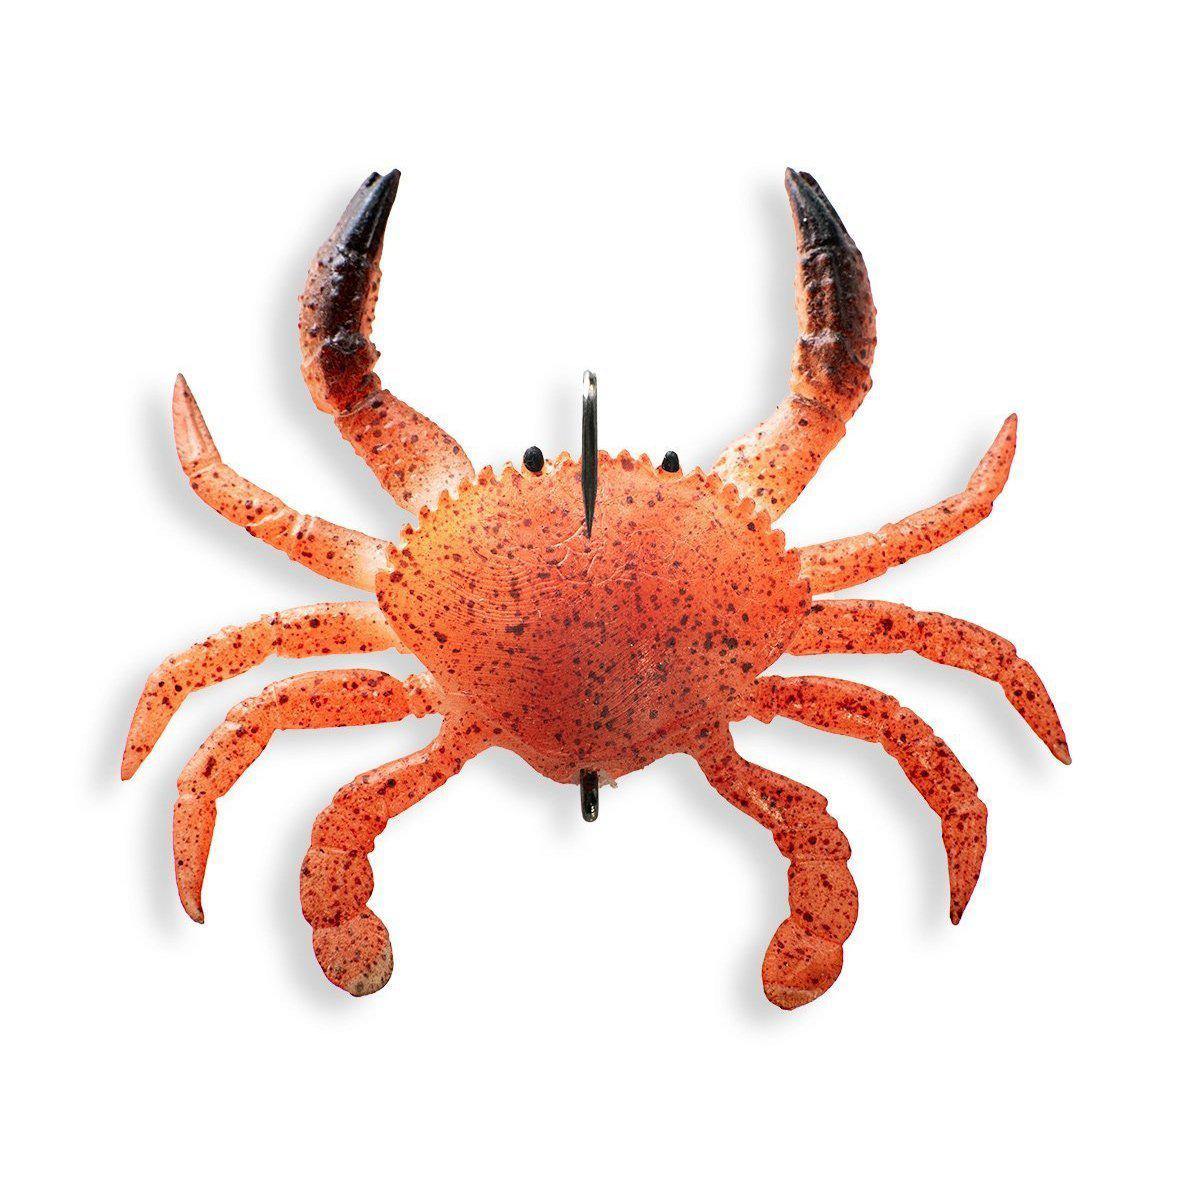 Chasebaits Crusty Crab 2 inch Crab-Imitating Soft Lure 2 pack